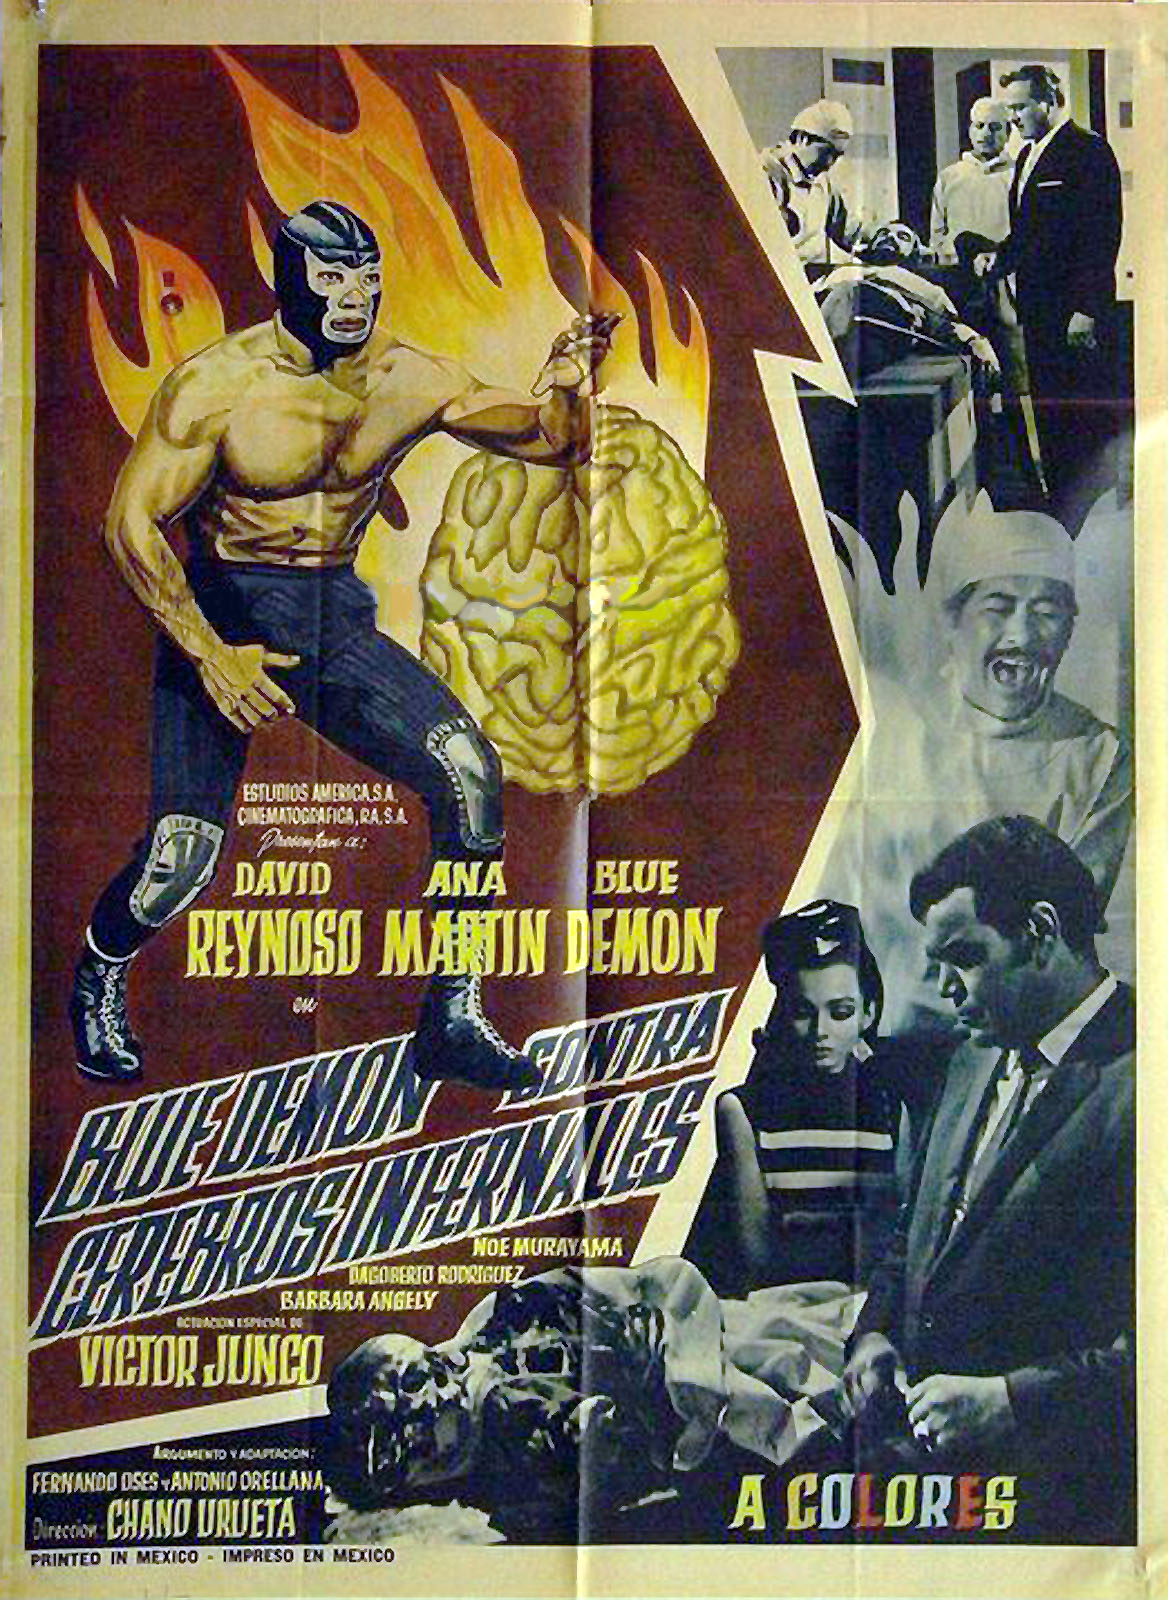 Blue Demon contra cerebros infernales (1968) Screenshot 2